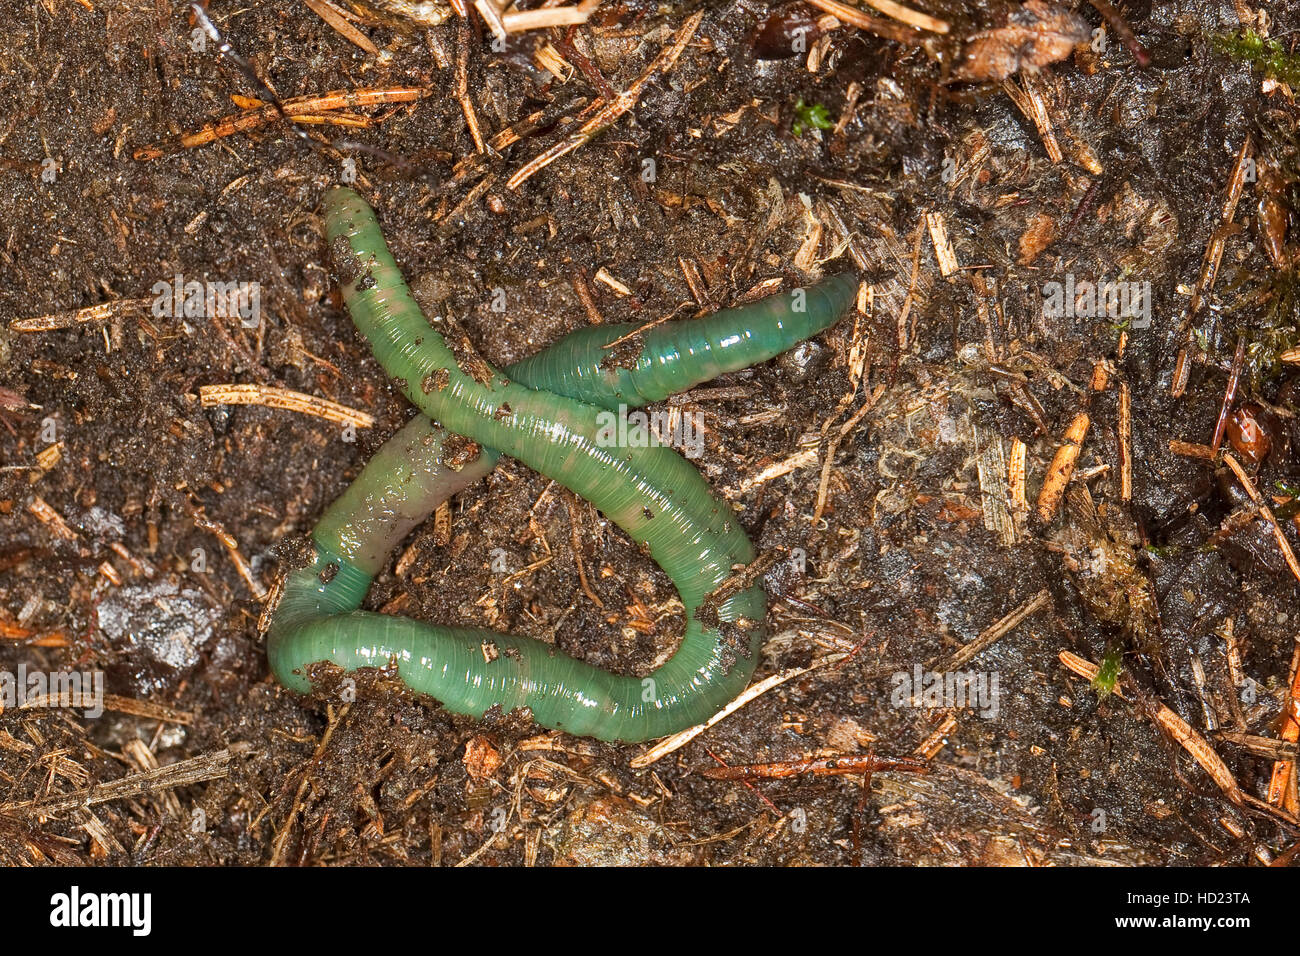 Grüner Regenwurm, Smaragdgrüner Regenwurm, Allolobophora smaragdina, Earthworm Stock Photo